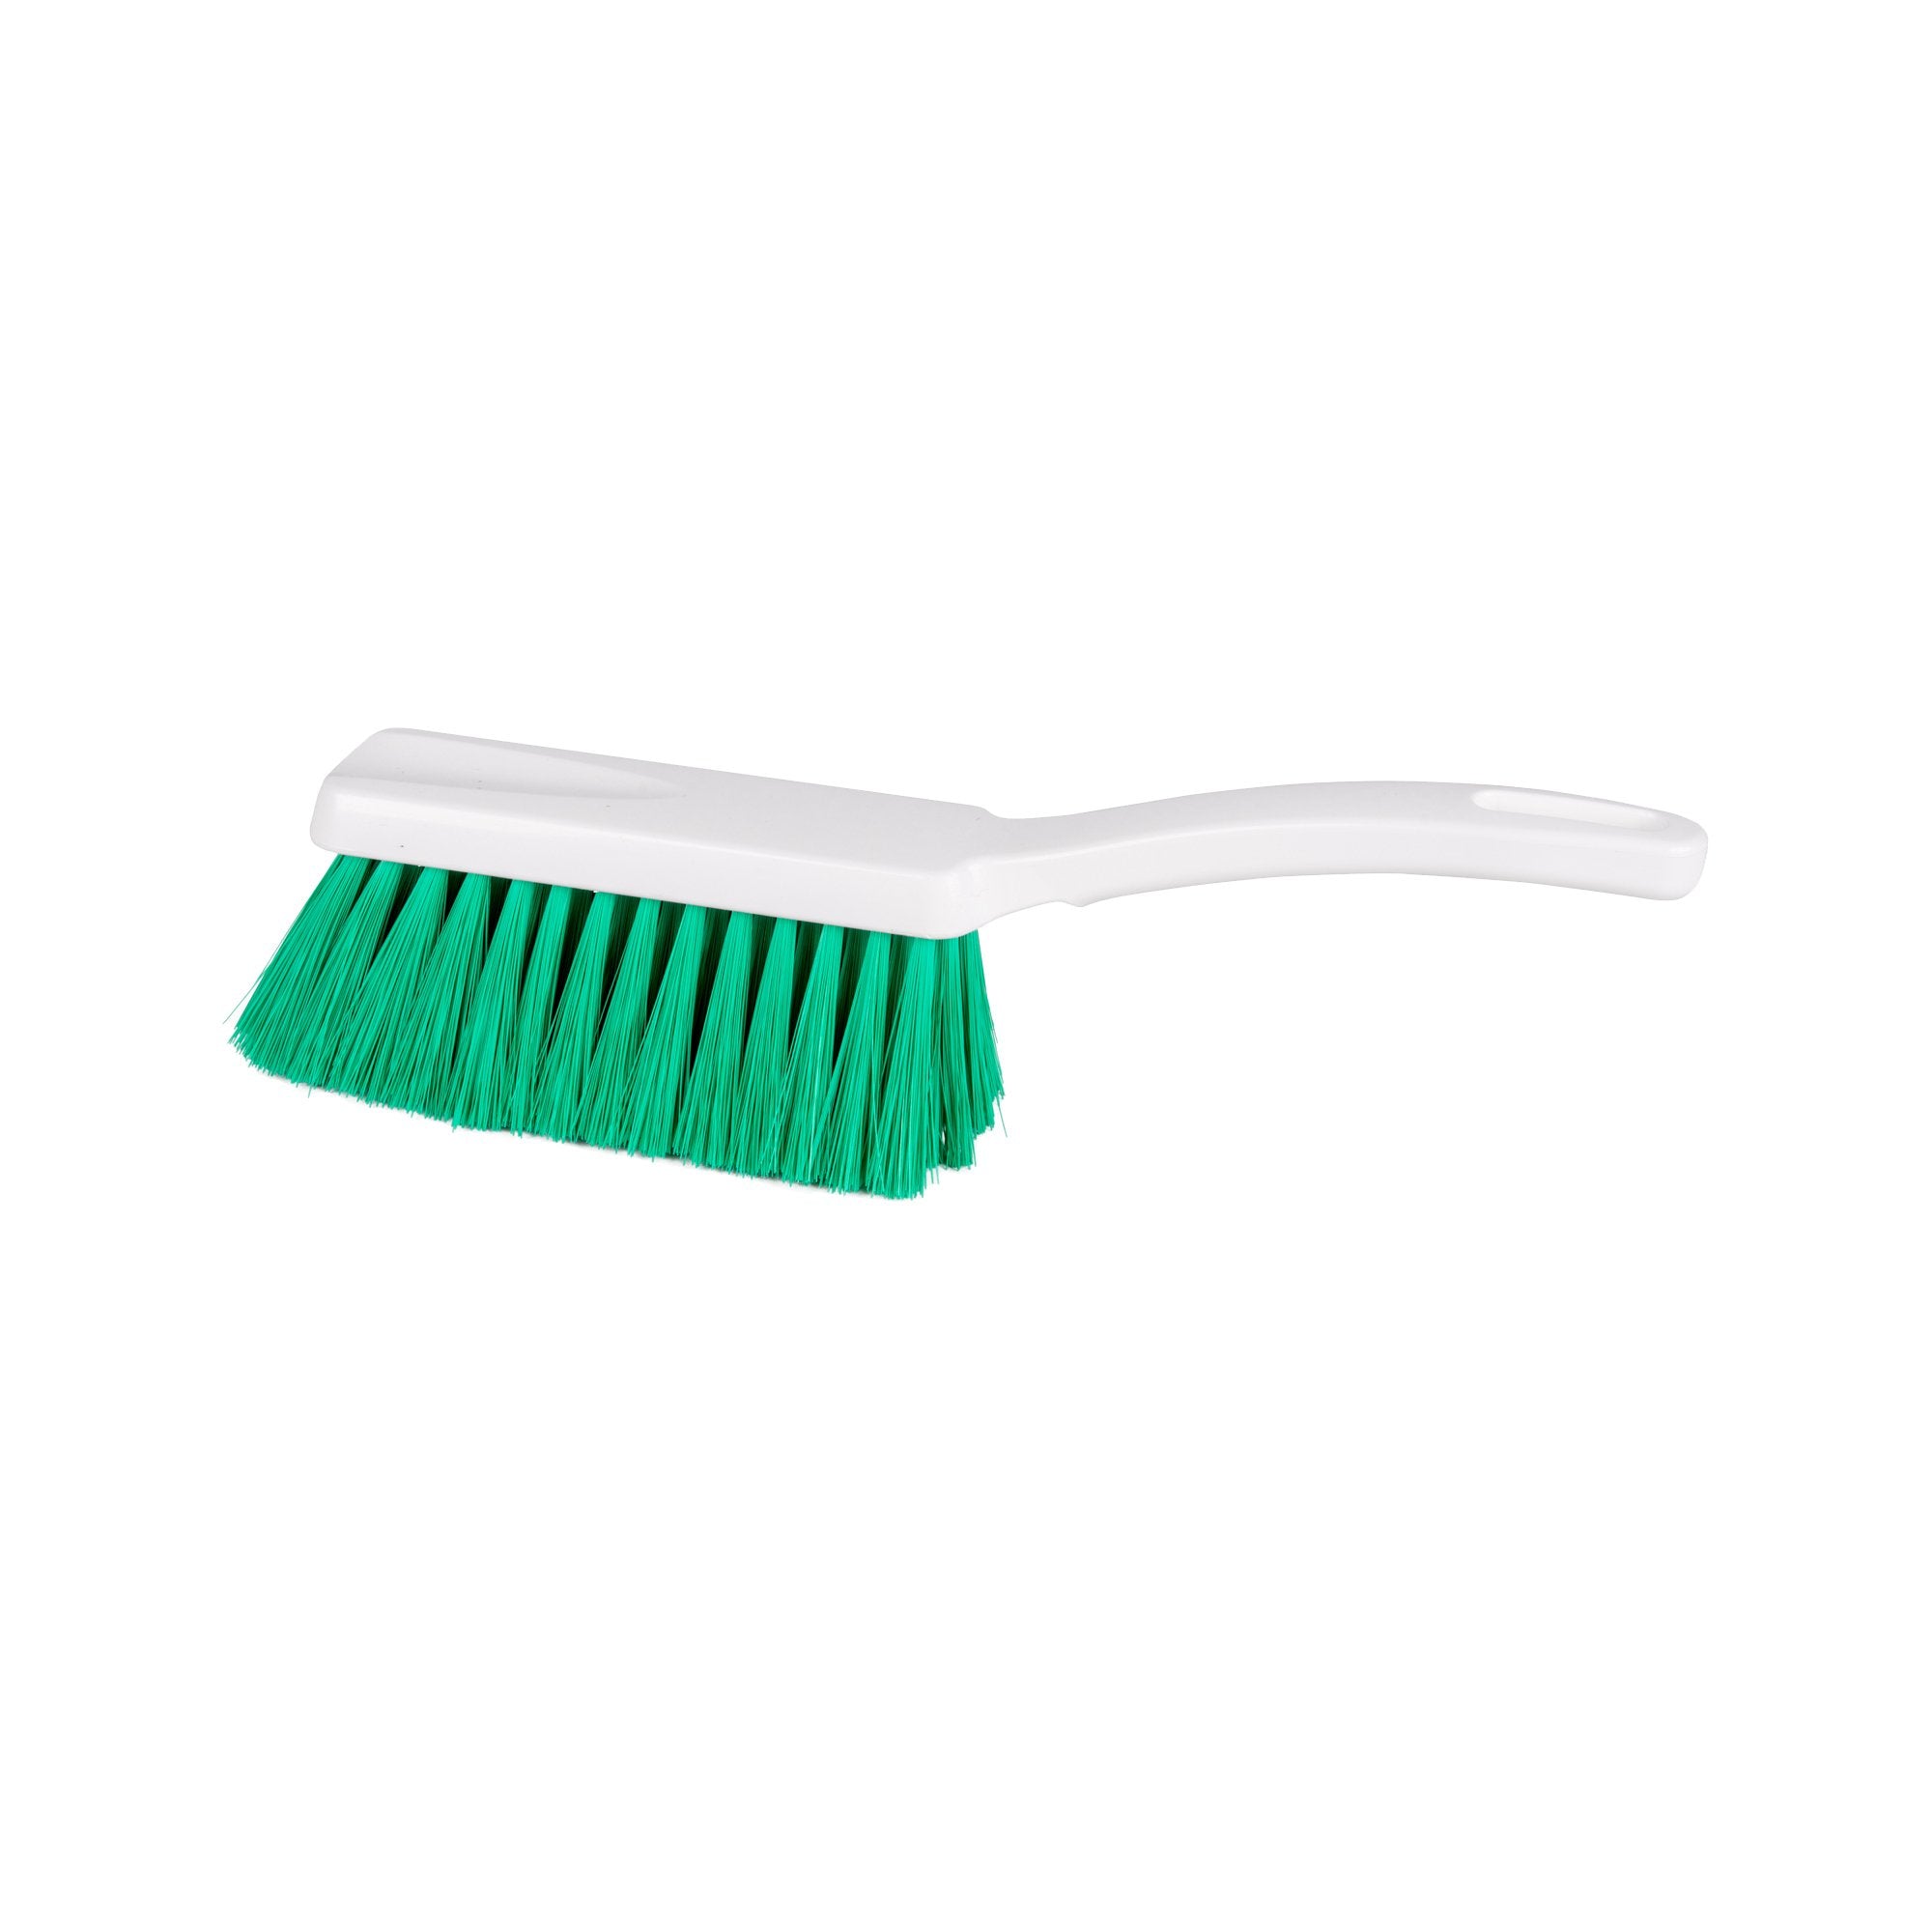 la-briantina-professional-spazzola-setola-morbida-haccp-colore-verde